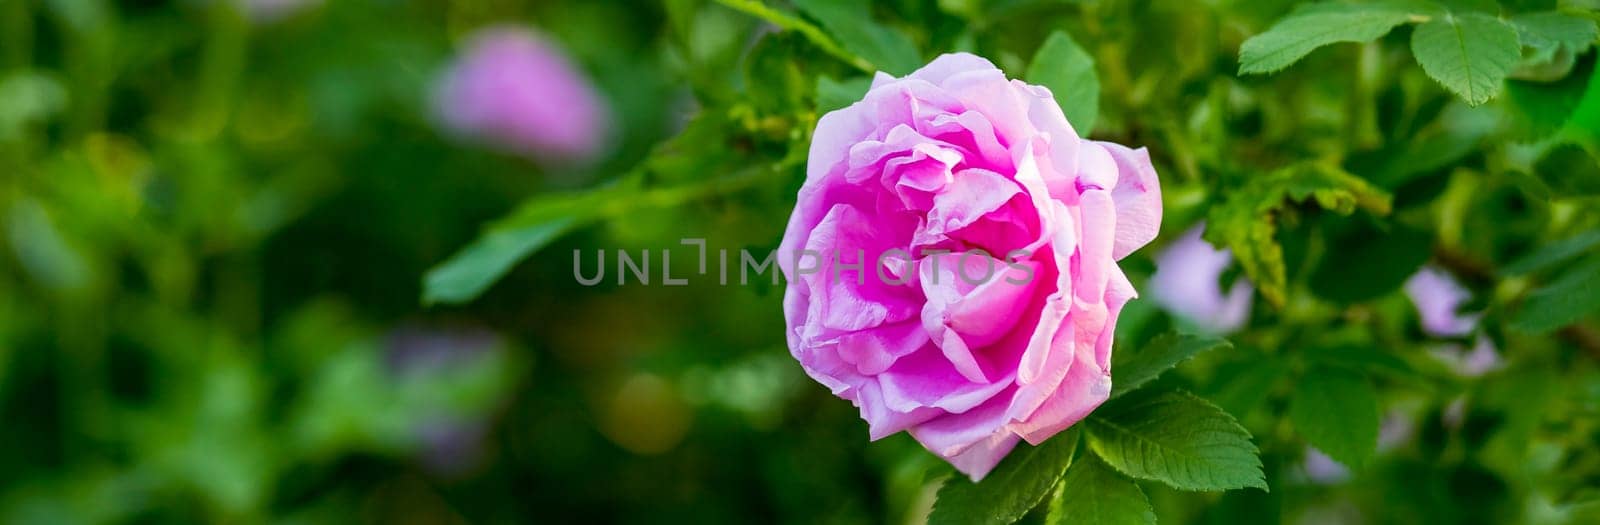 A single pink garden rose blooming close up.Tea rose on a bush. Beautiful pink rosebud. by YuliaYaspe1979